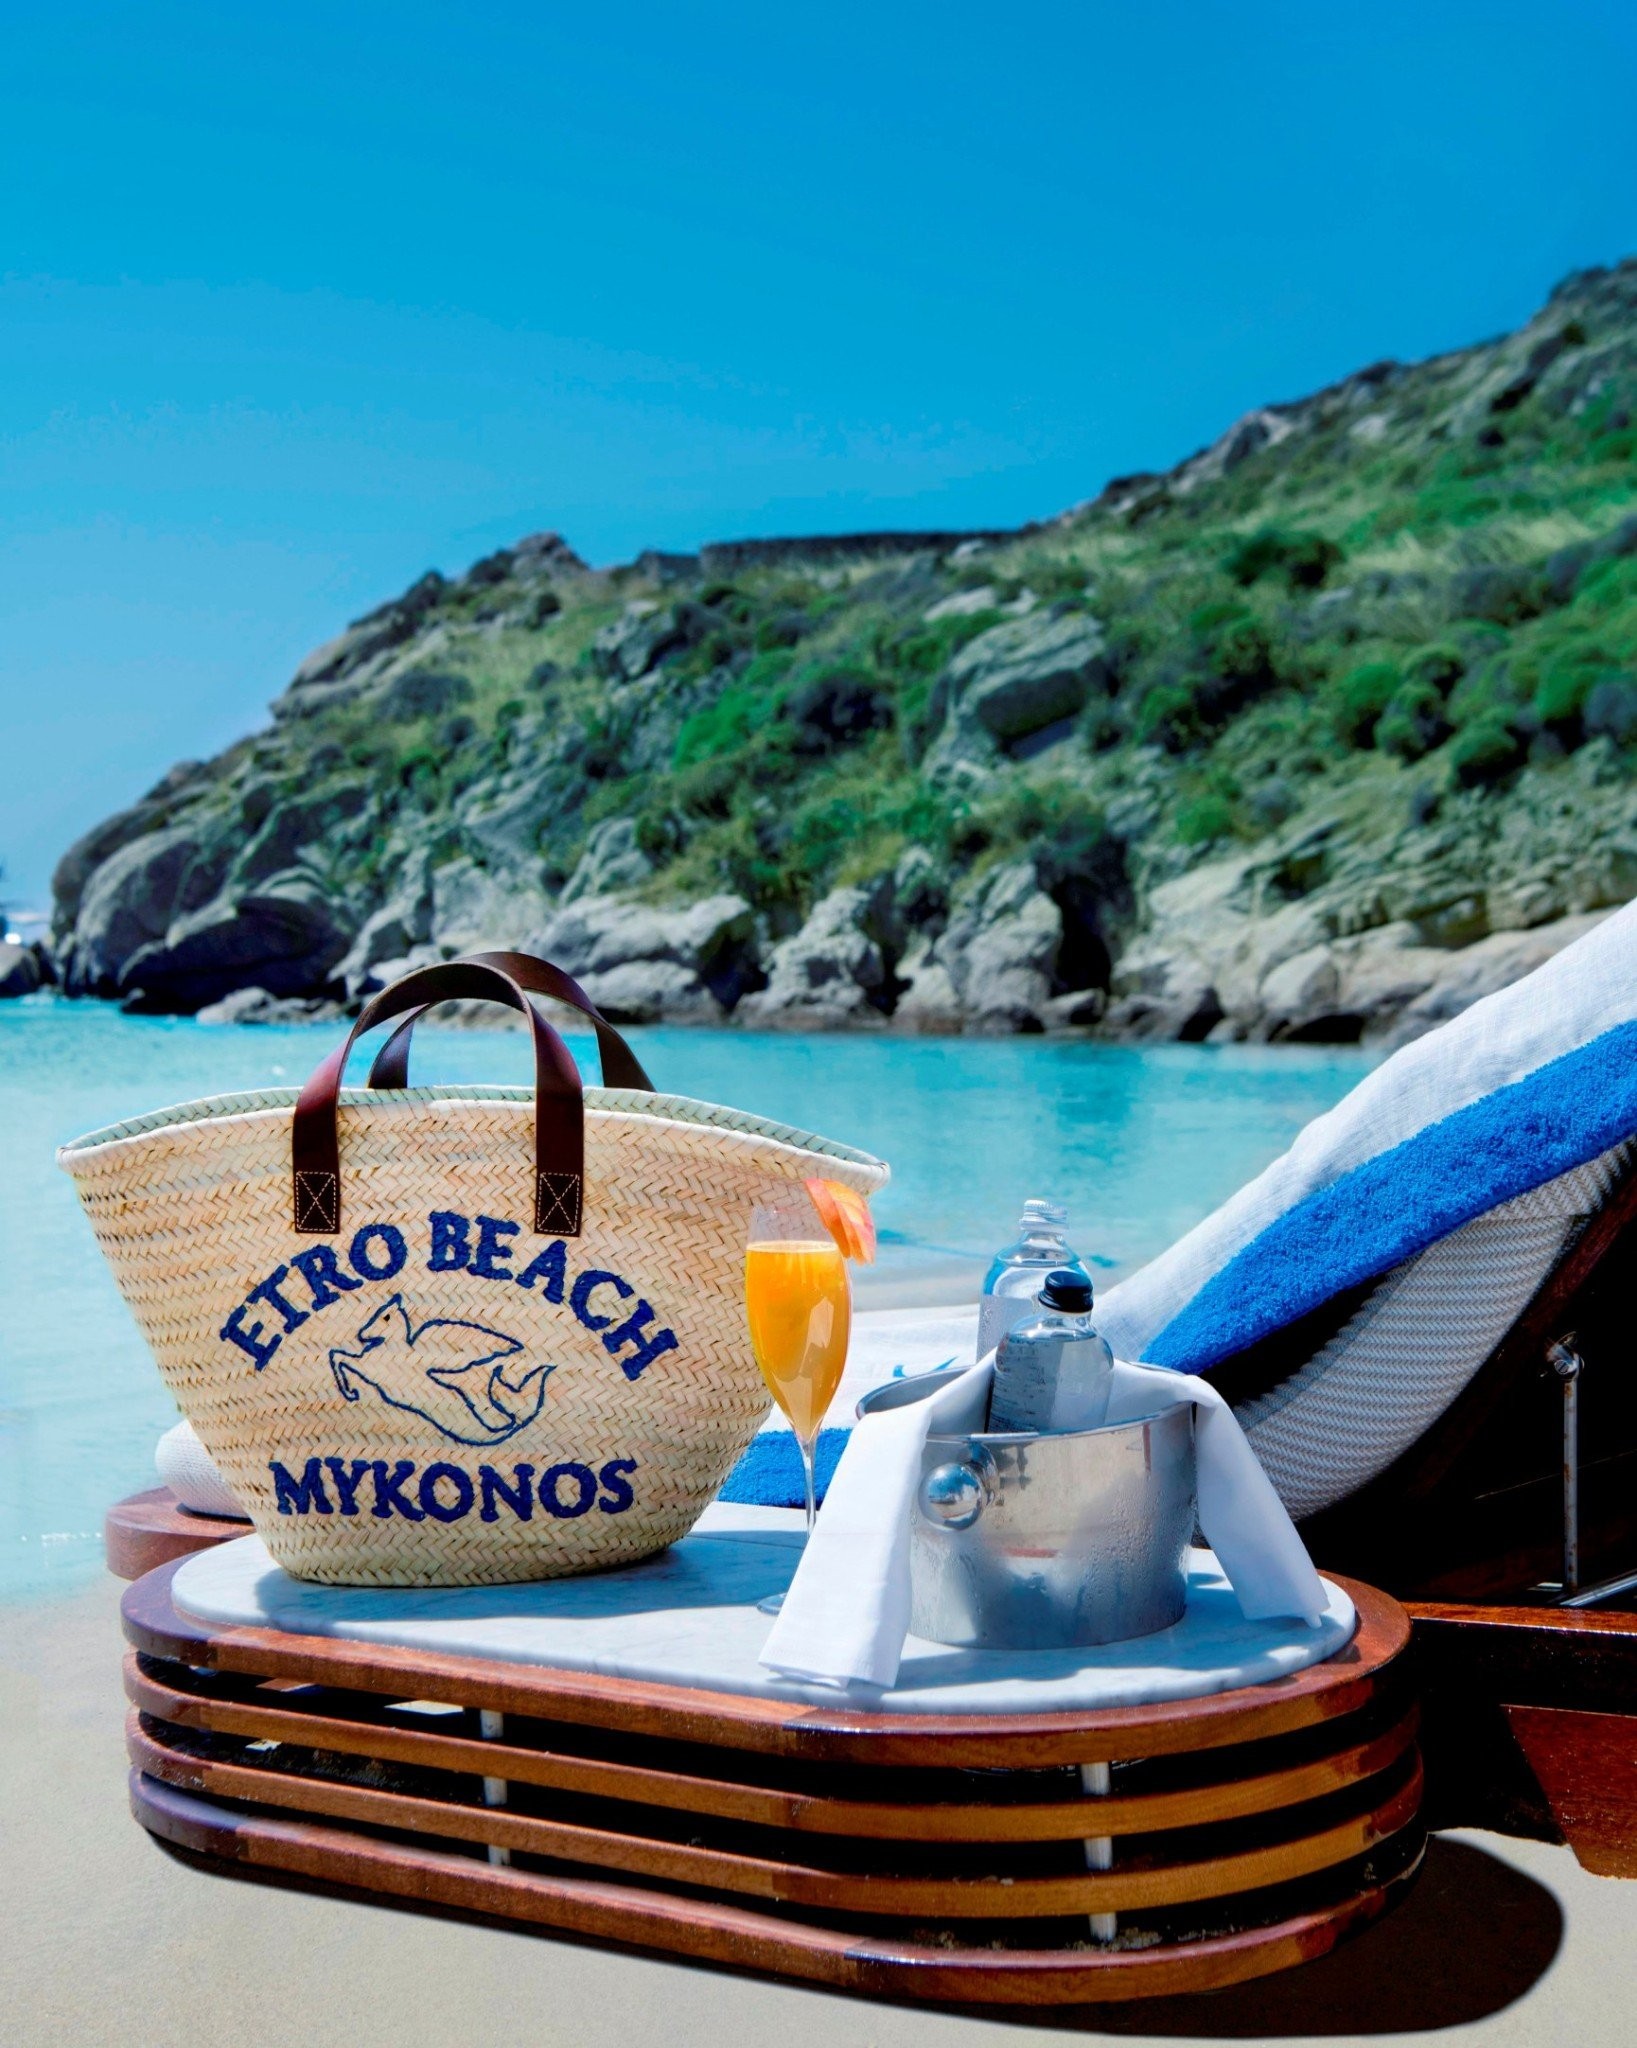 etro-beach-mykonos-1.jpg